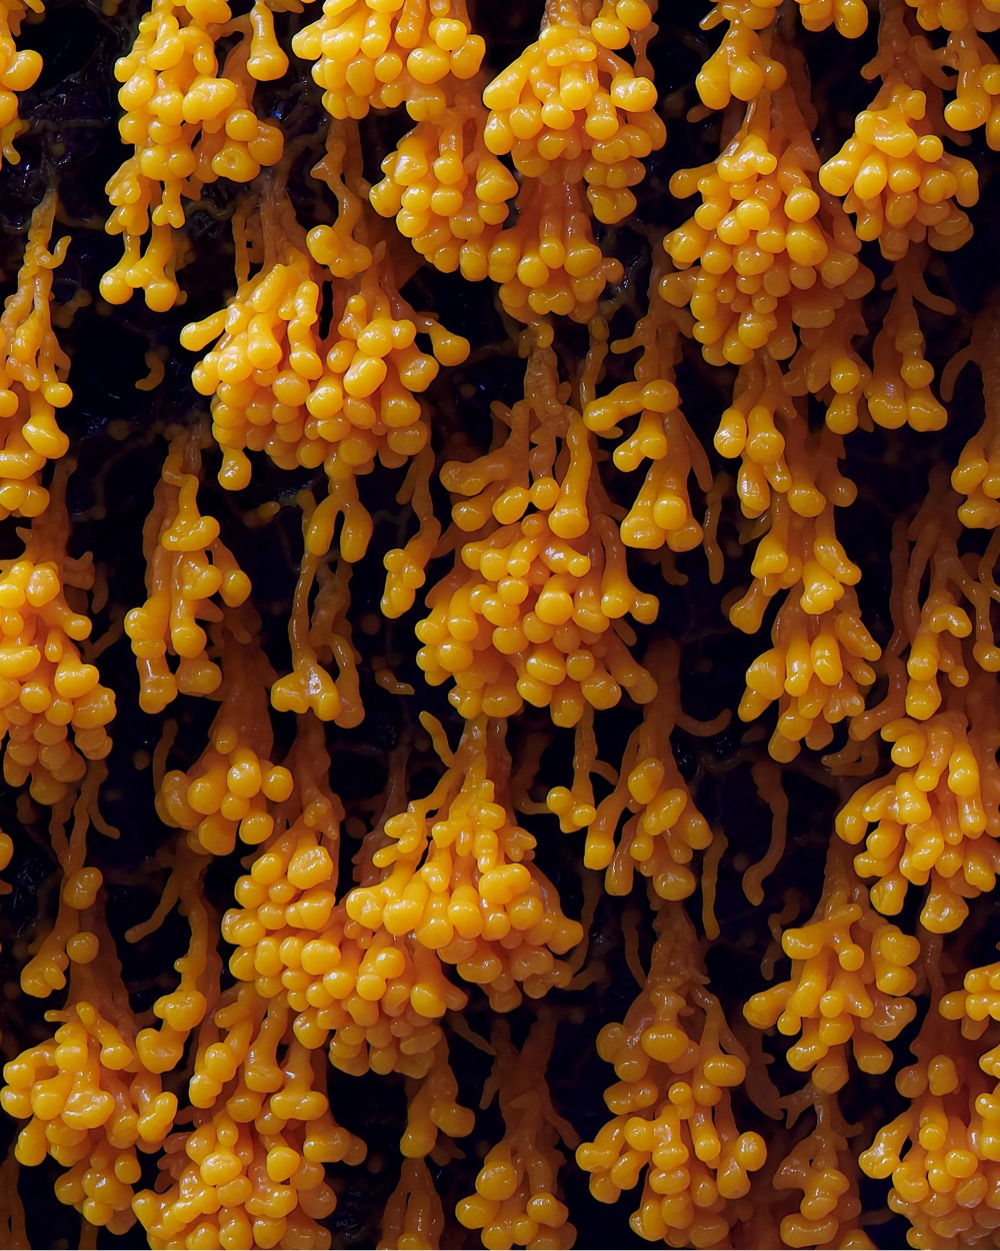 an orange slime mold